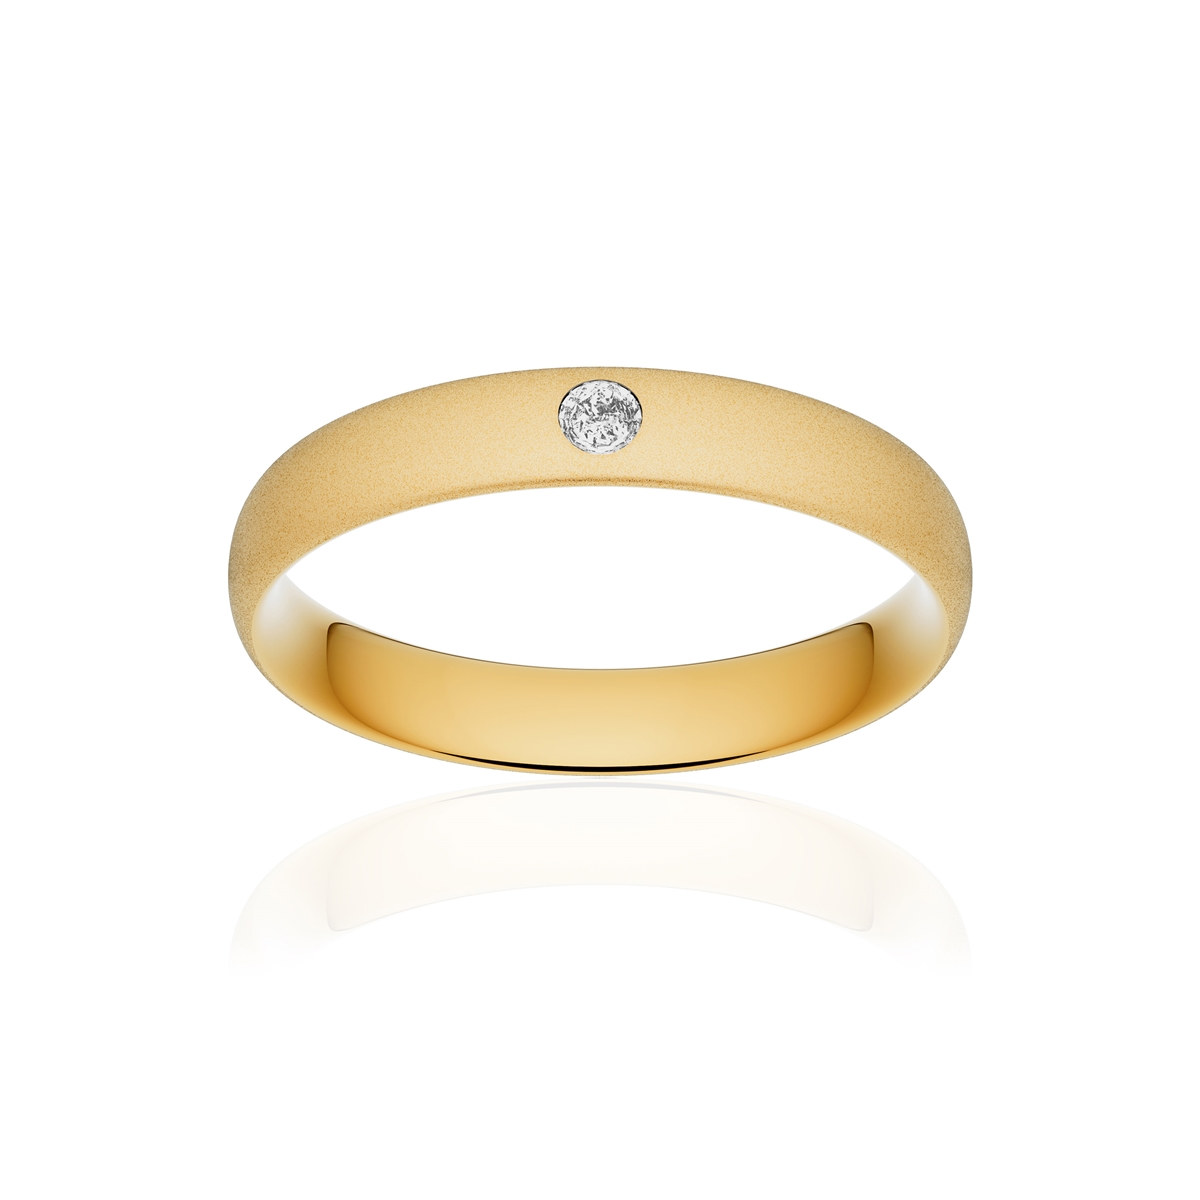 Alliance or 375 jaune sablé demi-jonc confort 4mm diamant brillant